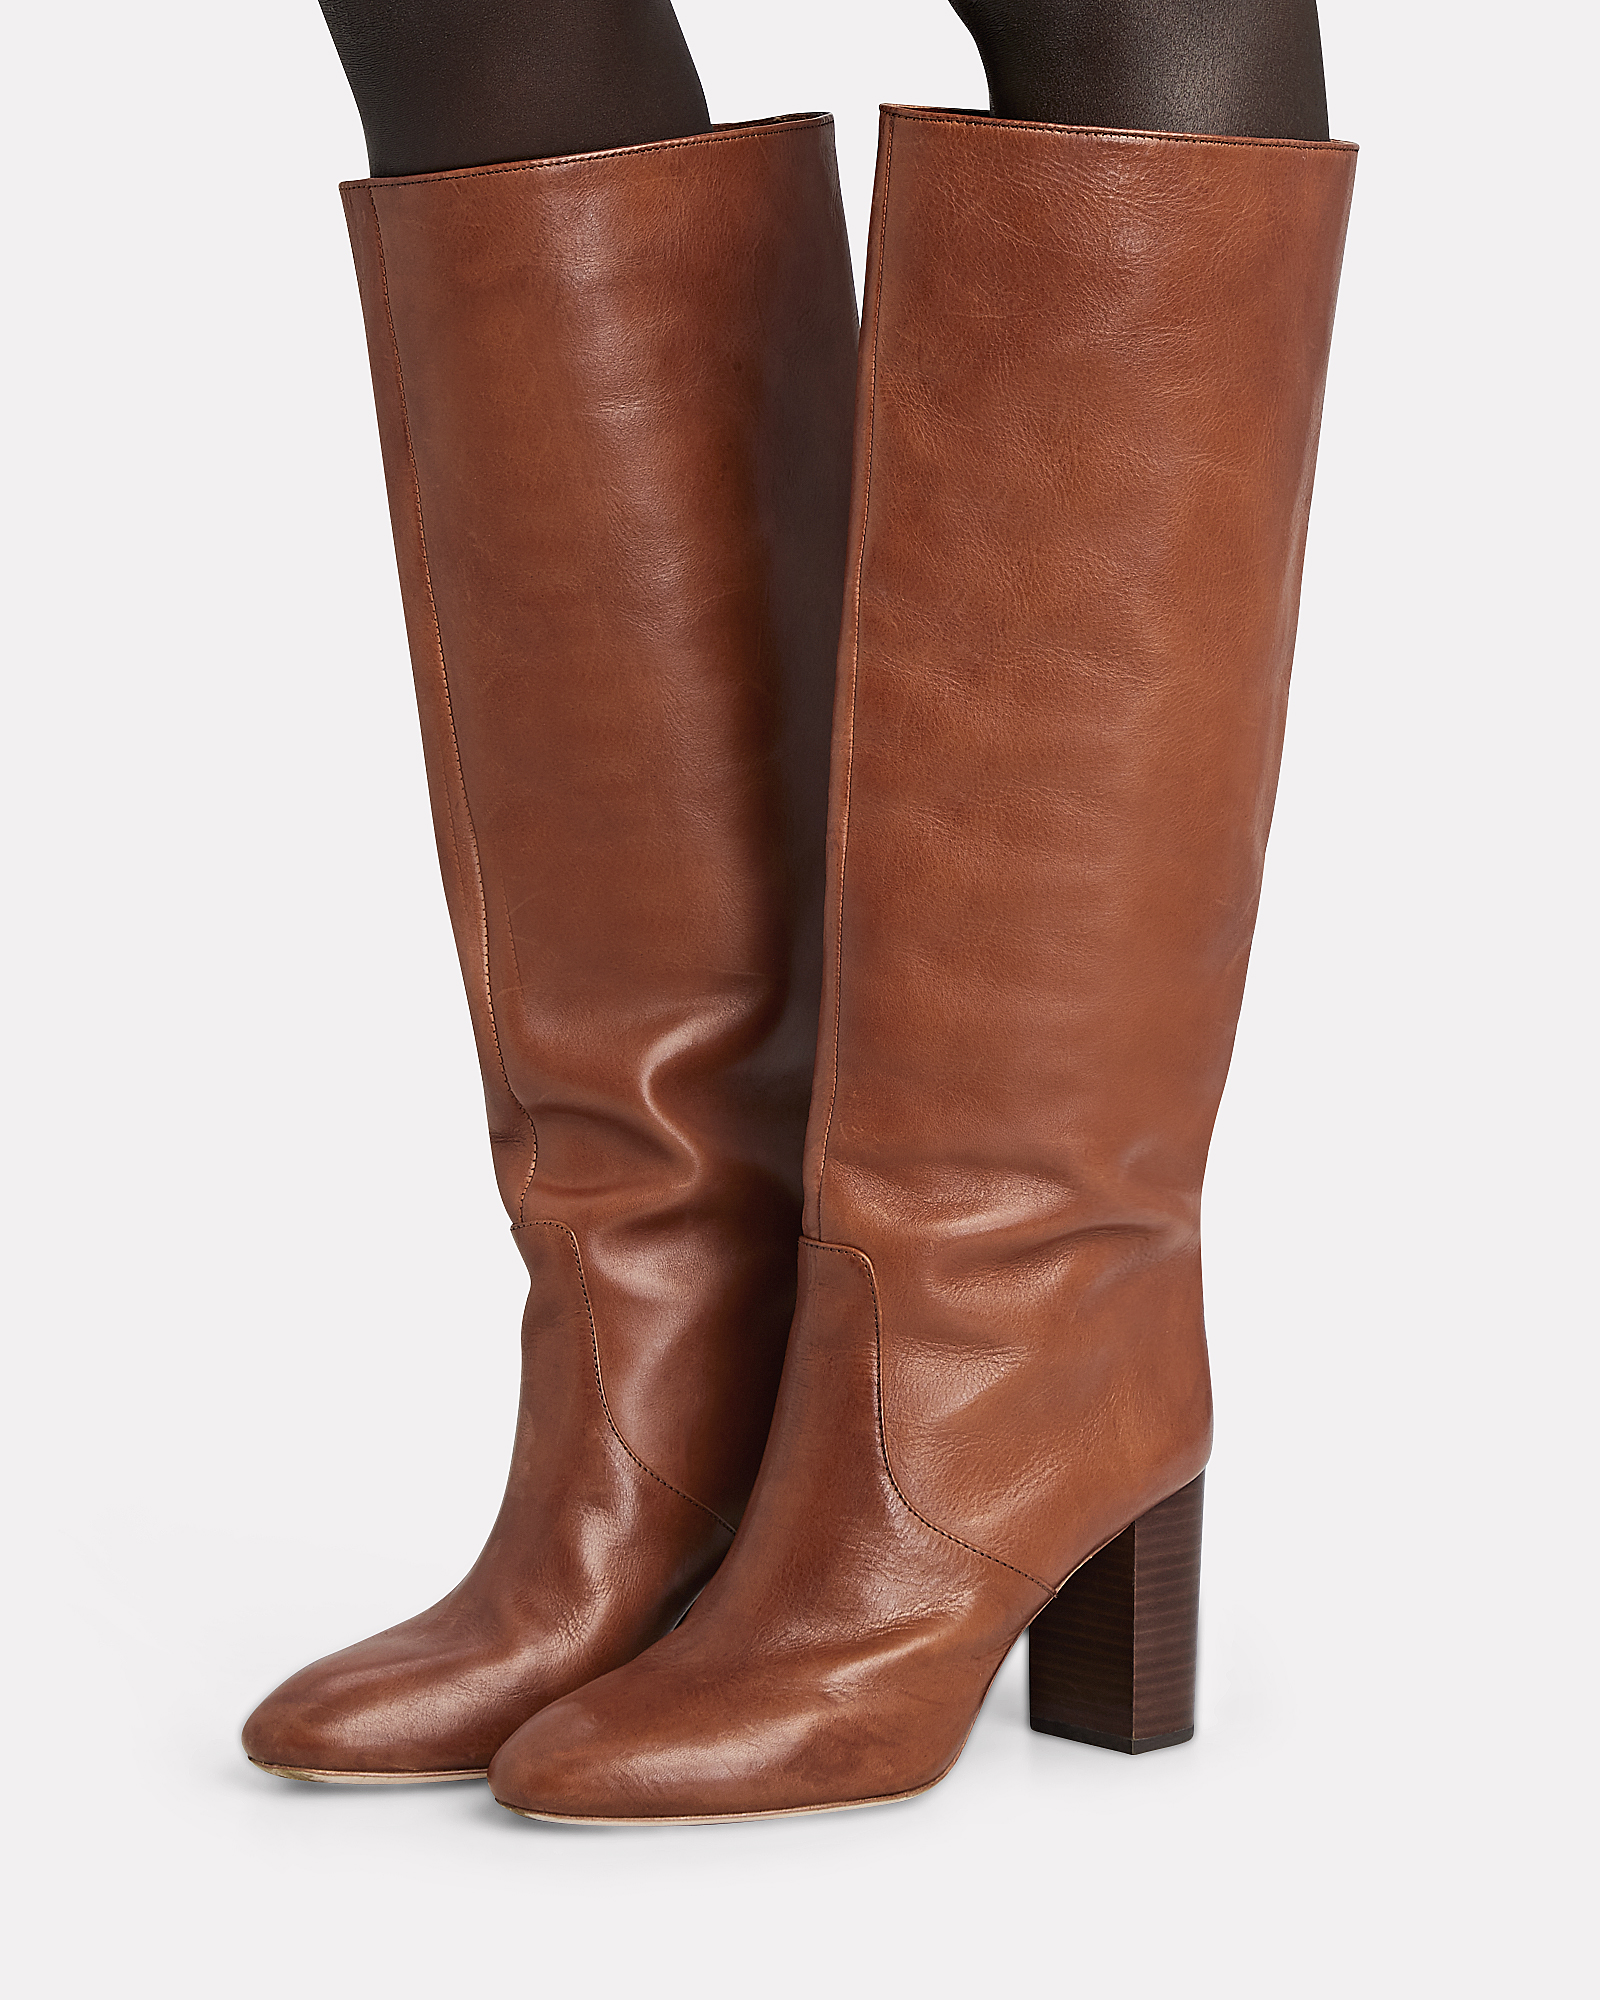 Loeffler Randall Goldy Knee-High Leather Boots | INTERMIX®